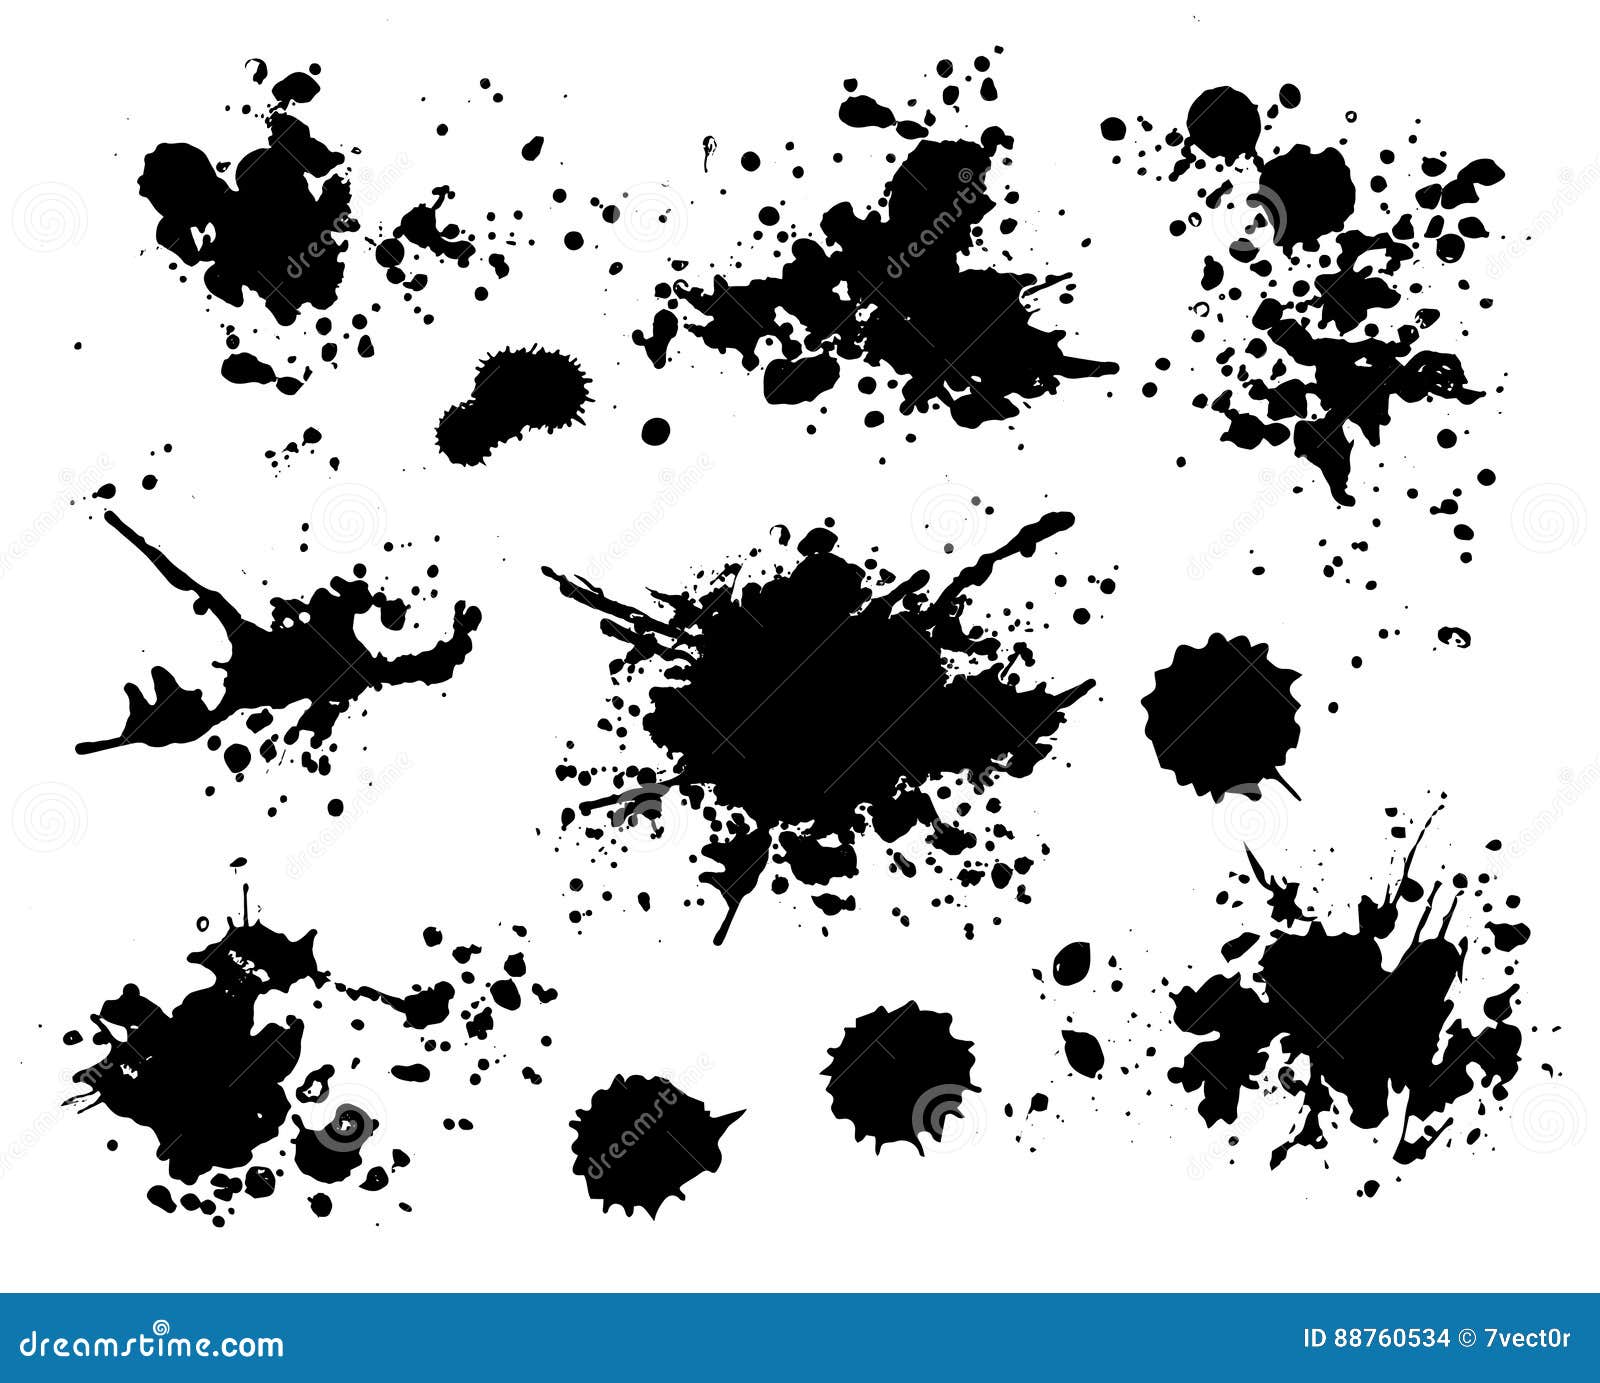 paint splatter splash silhouettes collection in black